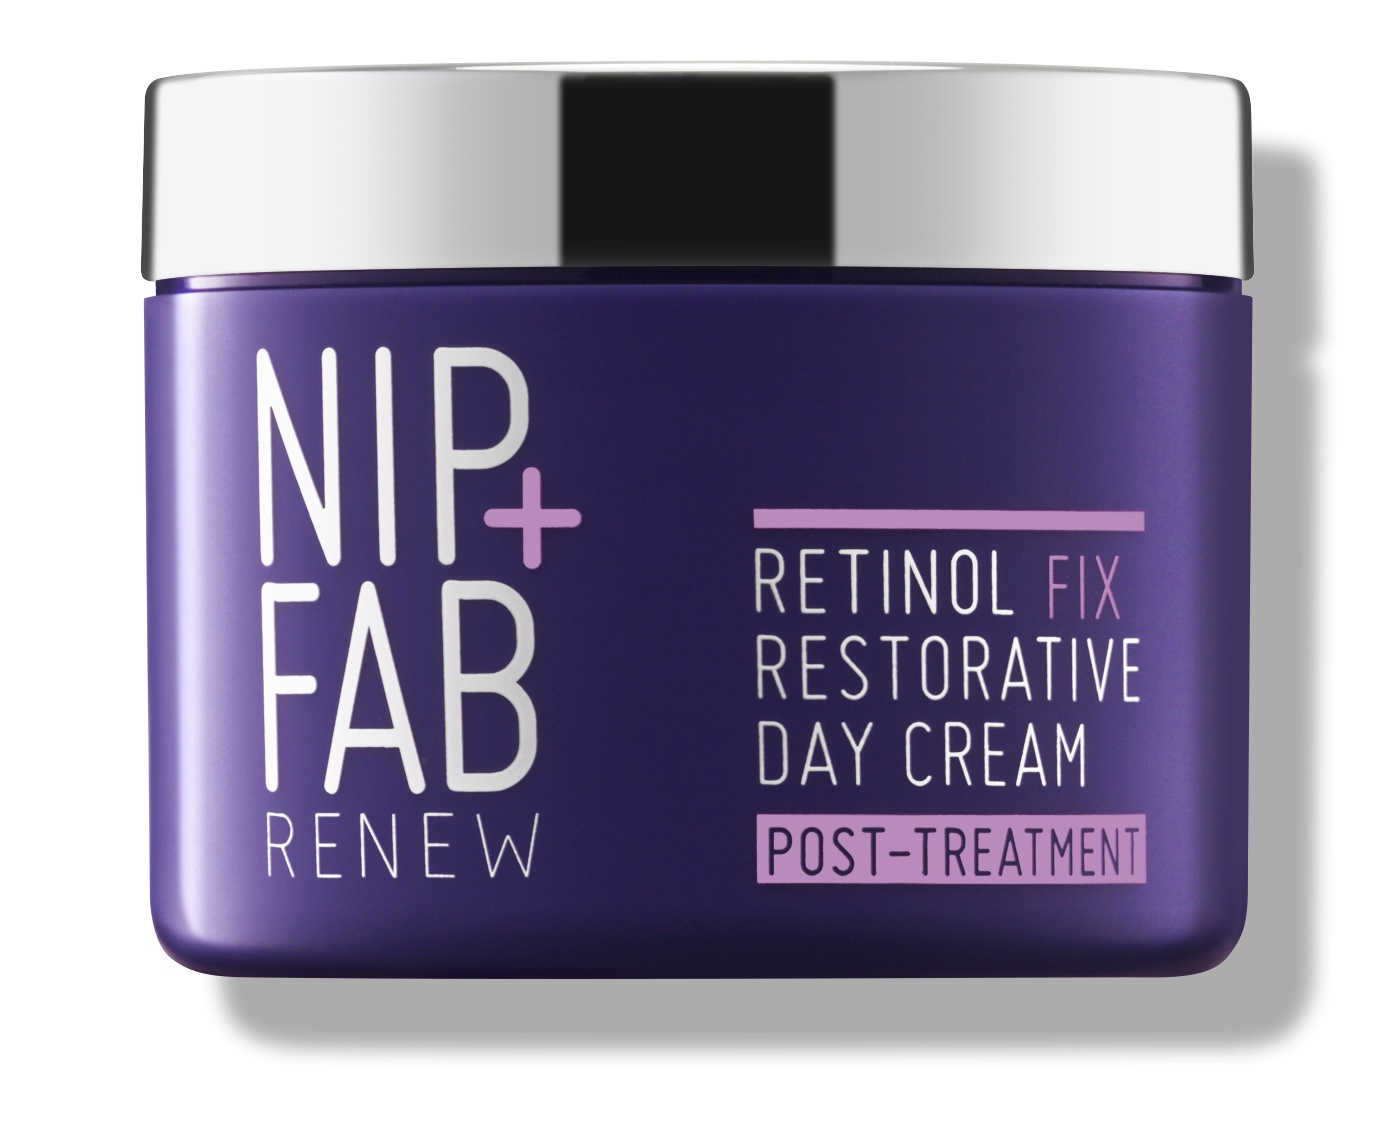 NIP + FAB Renew Retinol Fix Restorative Day Cream